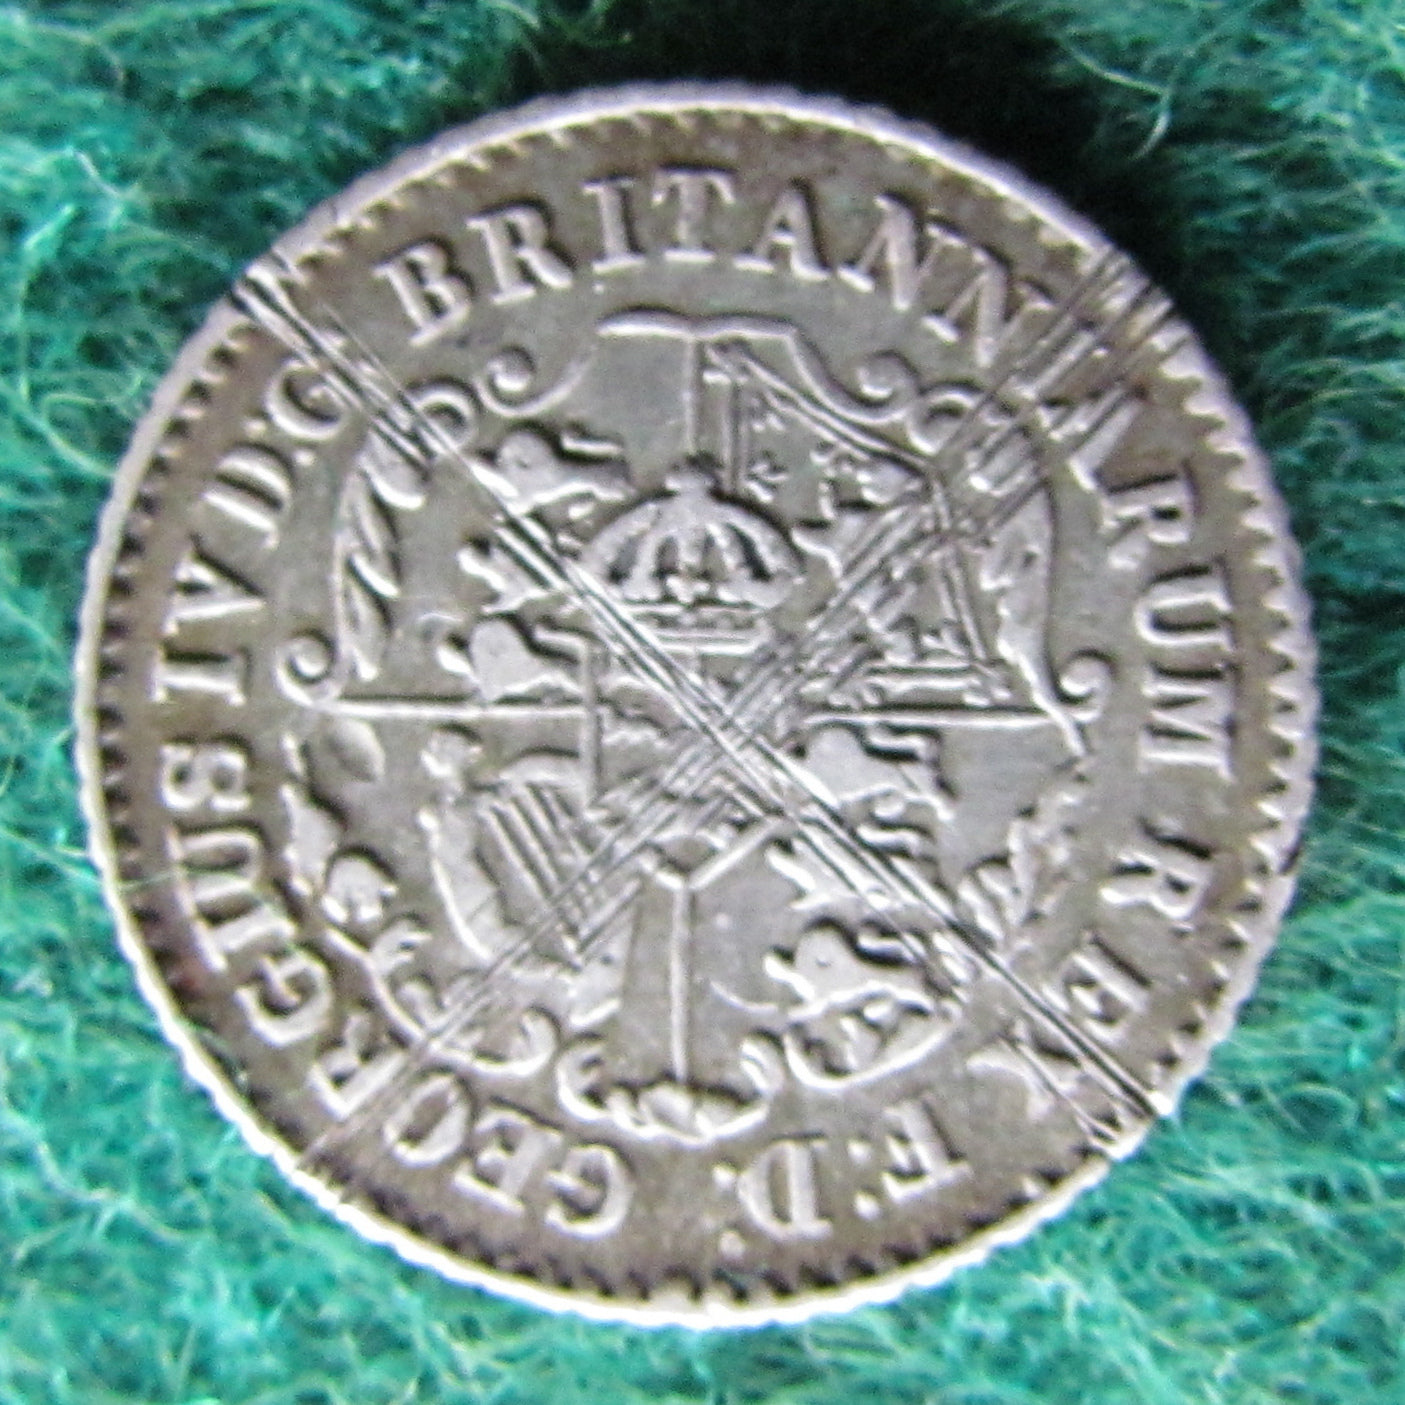 British West Indies 1822 Anchor Money 1/16 Dollar Silver Coin Sixteenth Dollar Coin